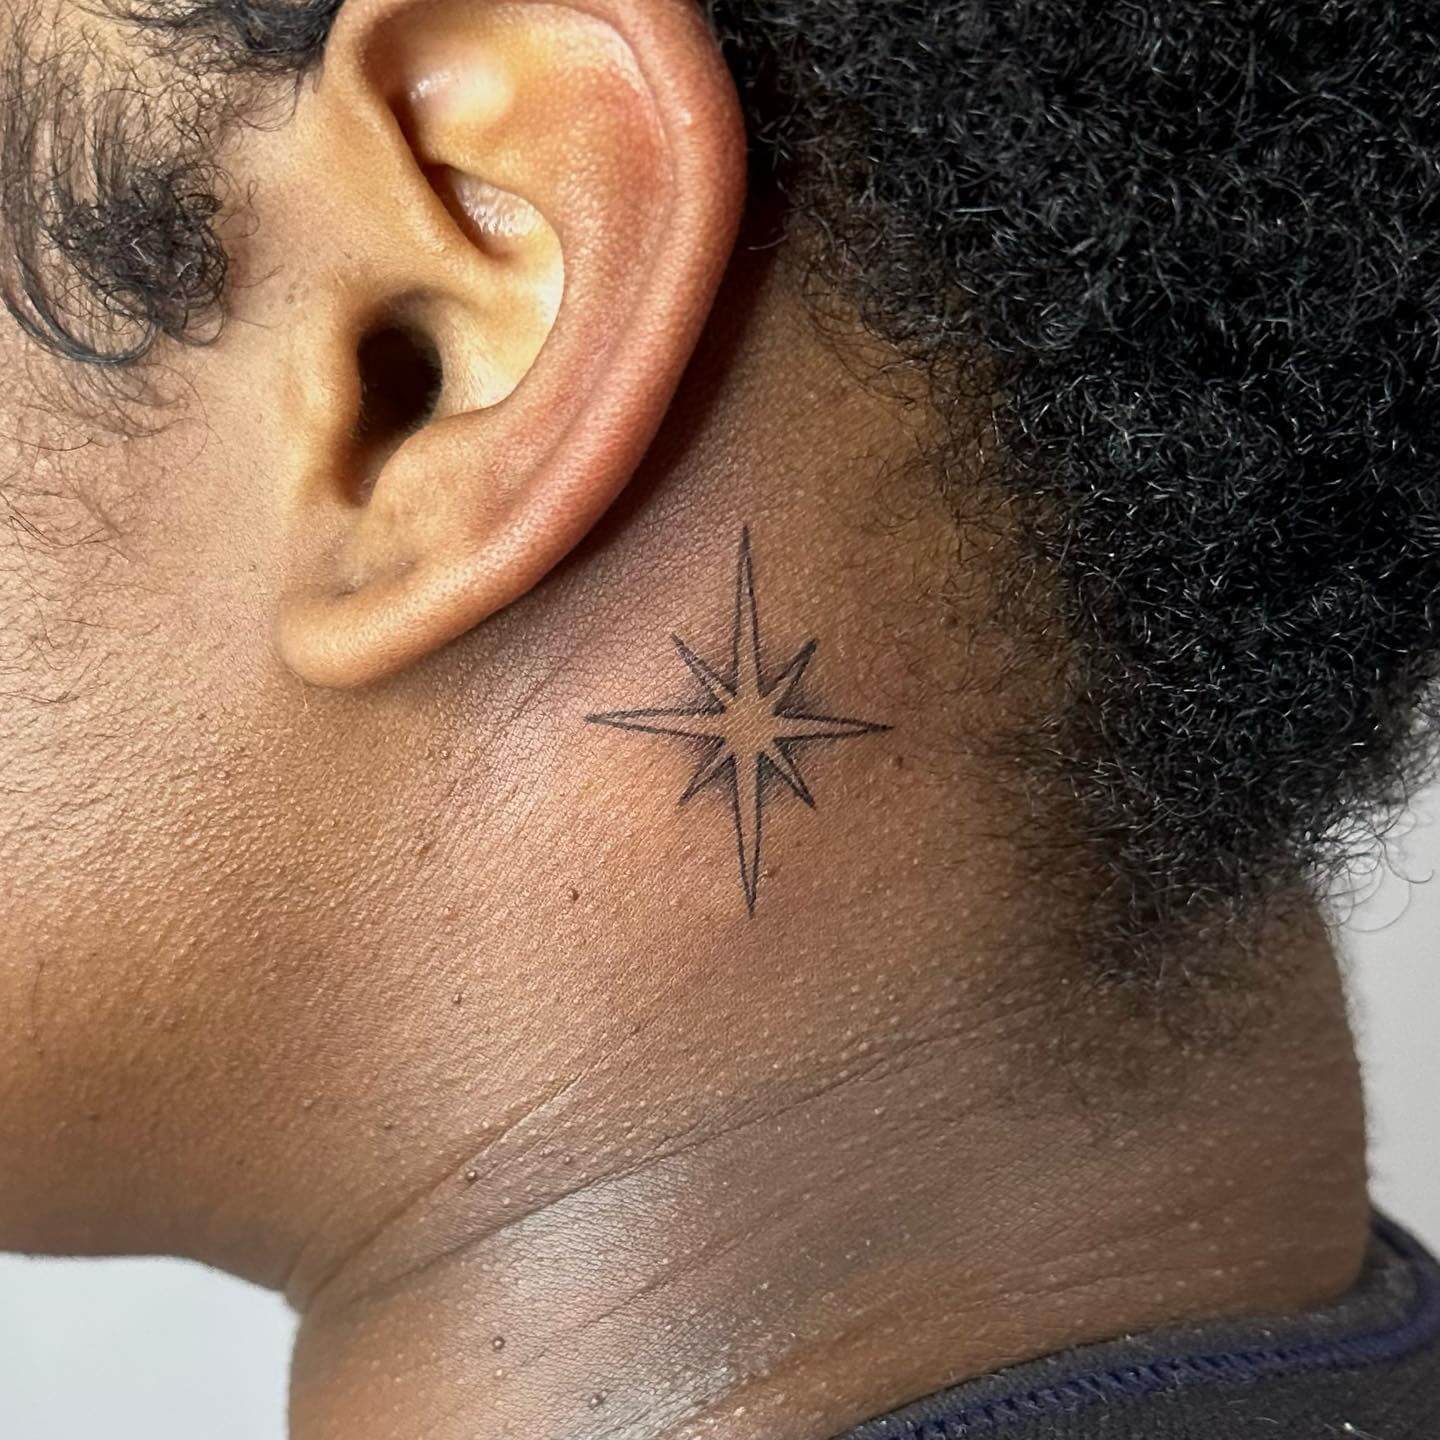 Stars Behind Ear Tattoo